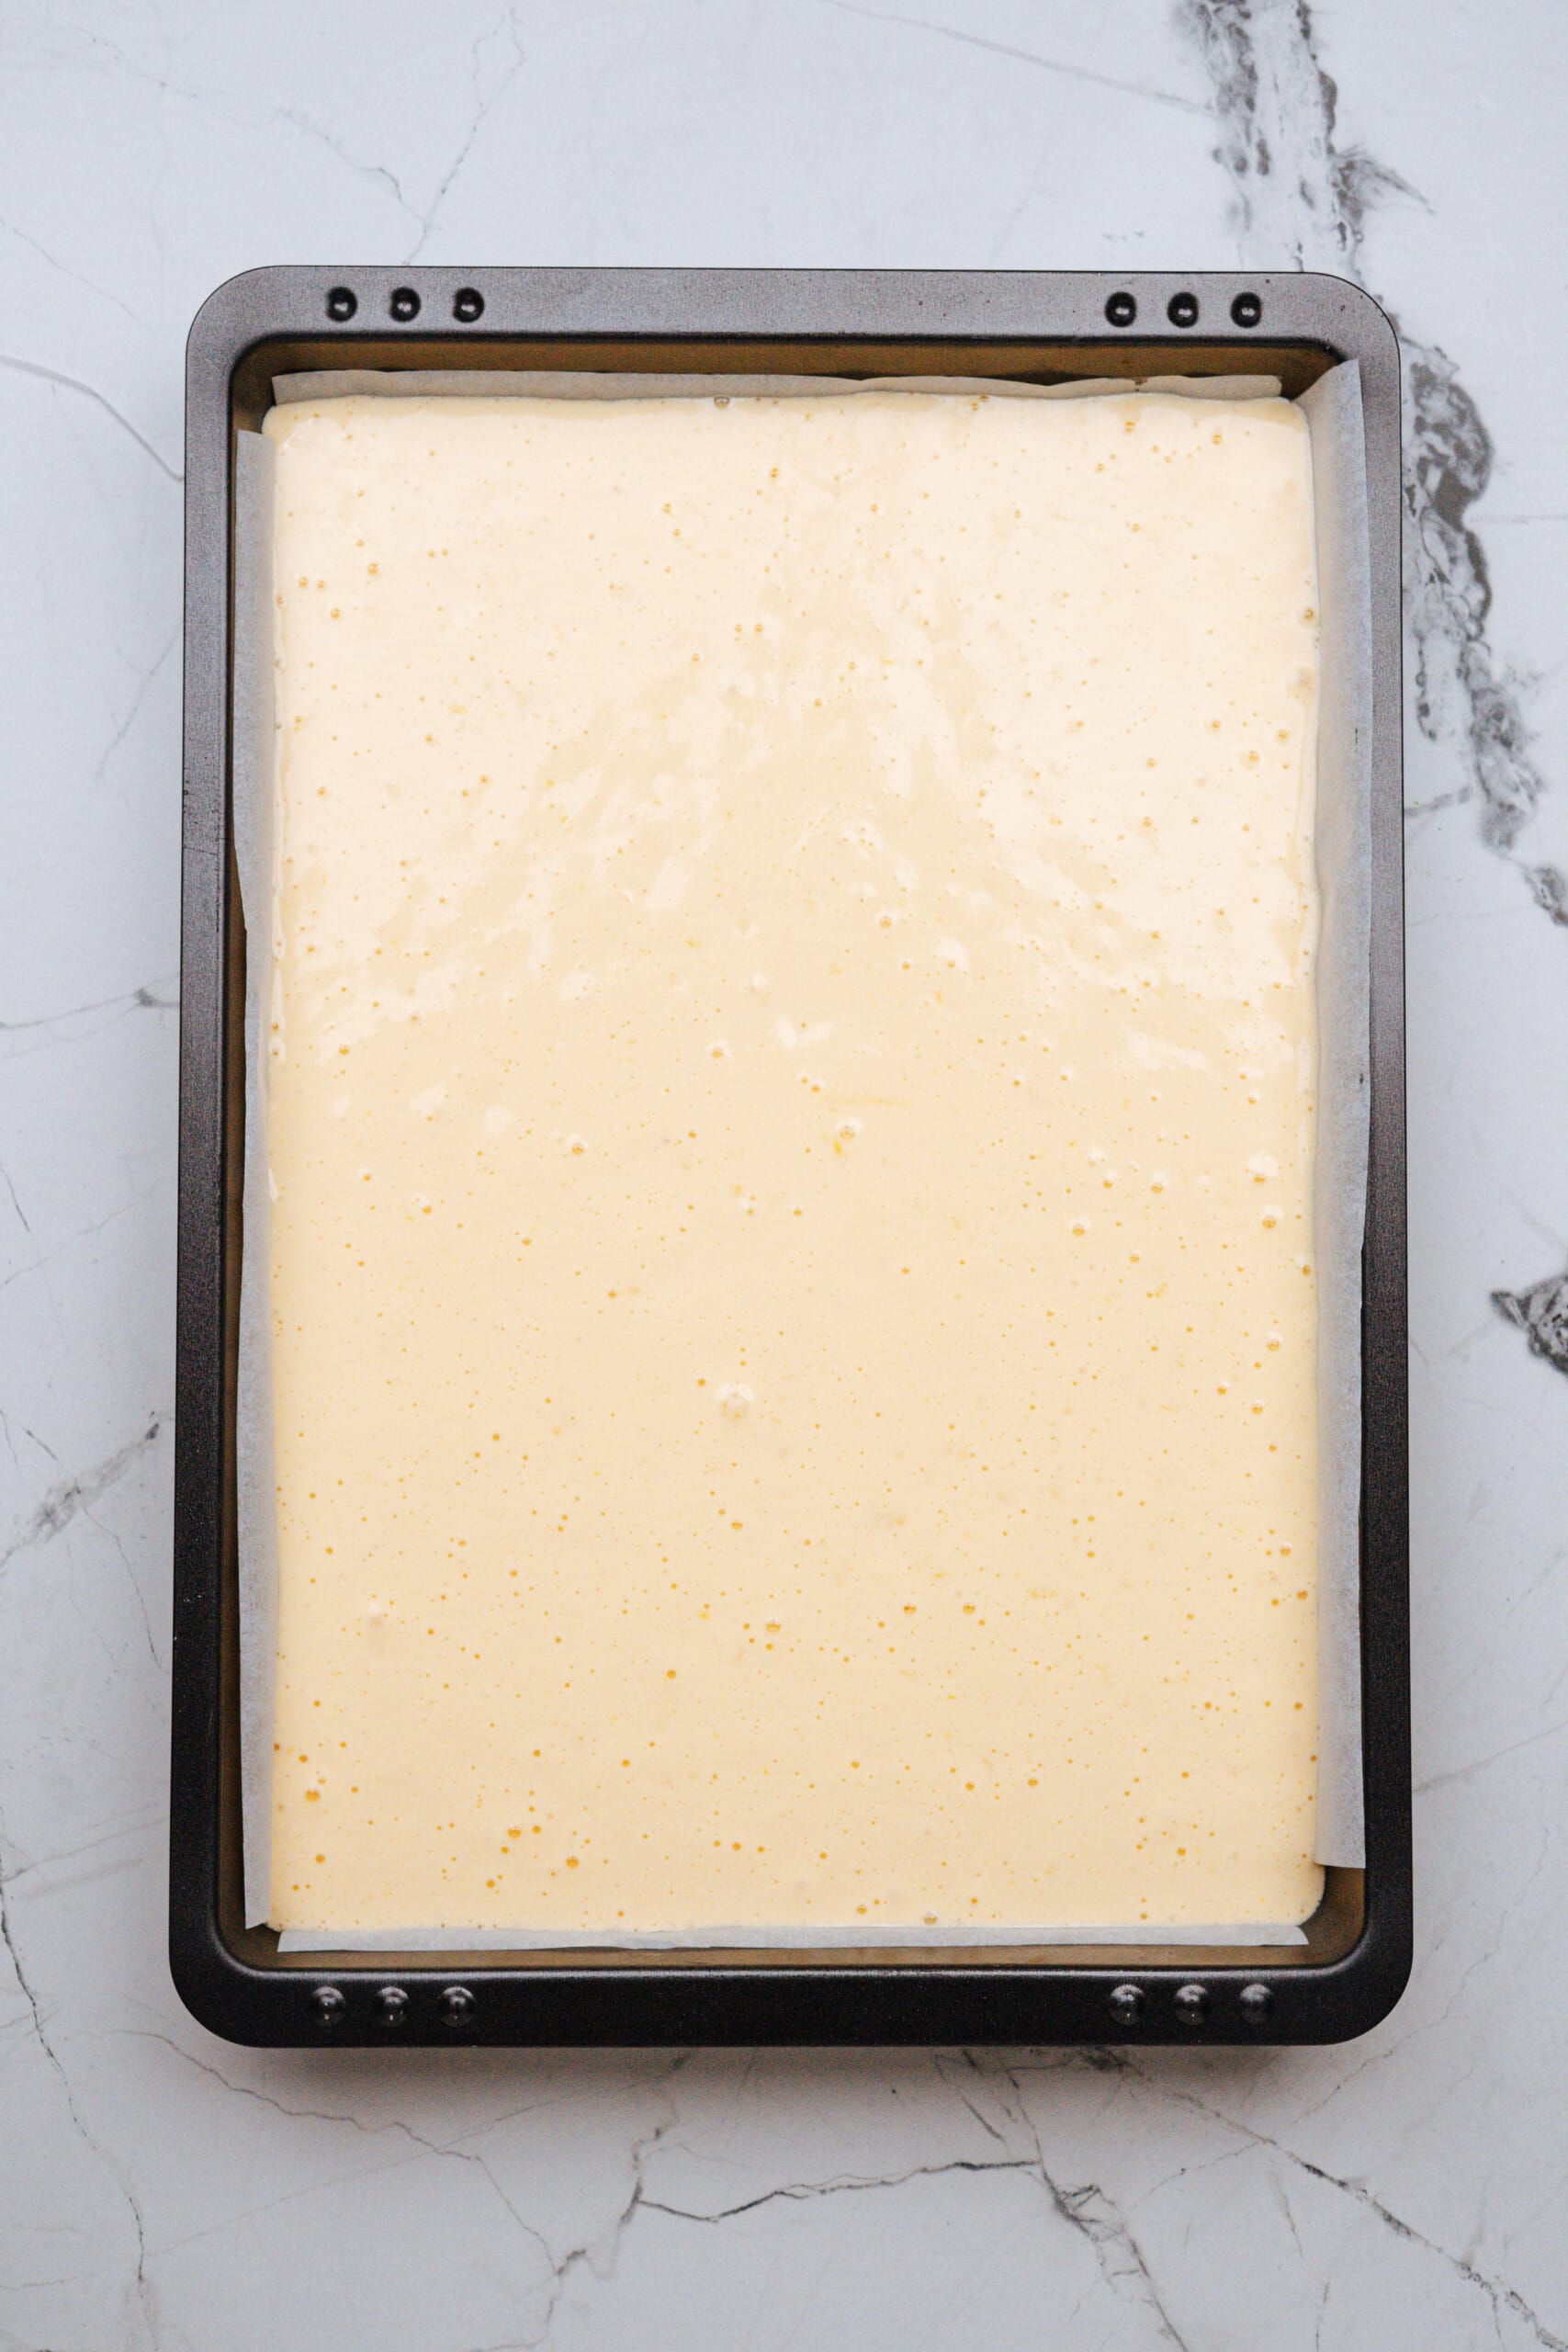 pistachio lemon roll cake batter in a baking pan uncooked